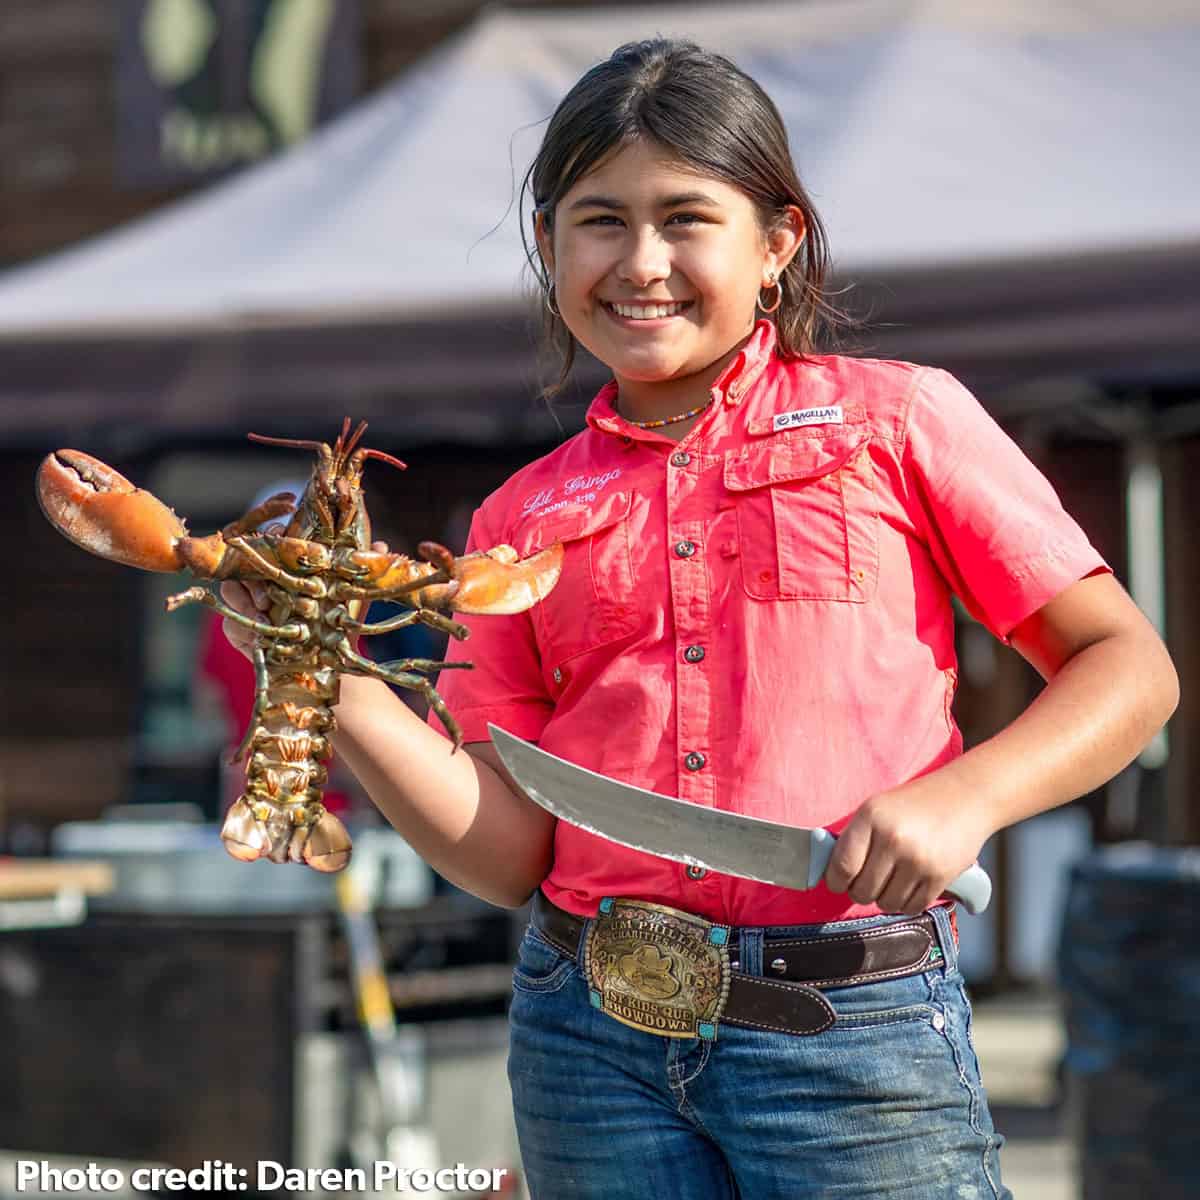 Raelyn Barker holding a lobster